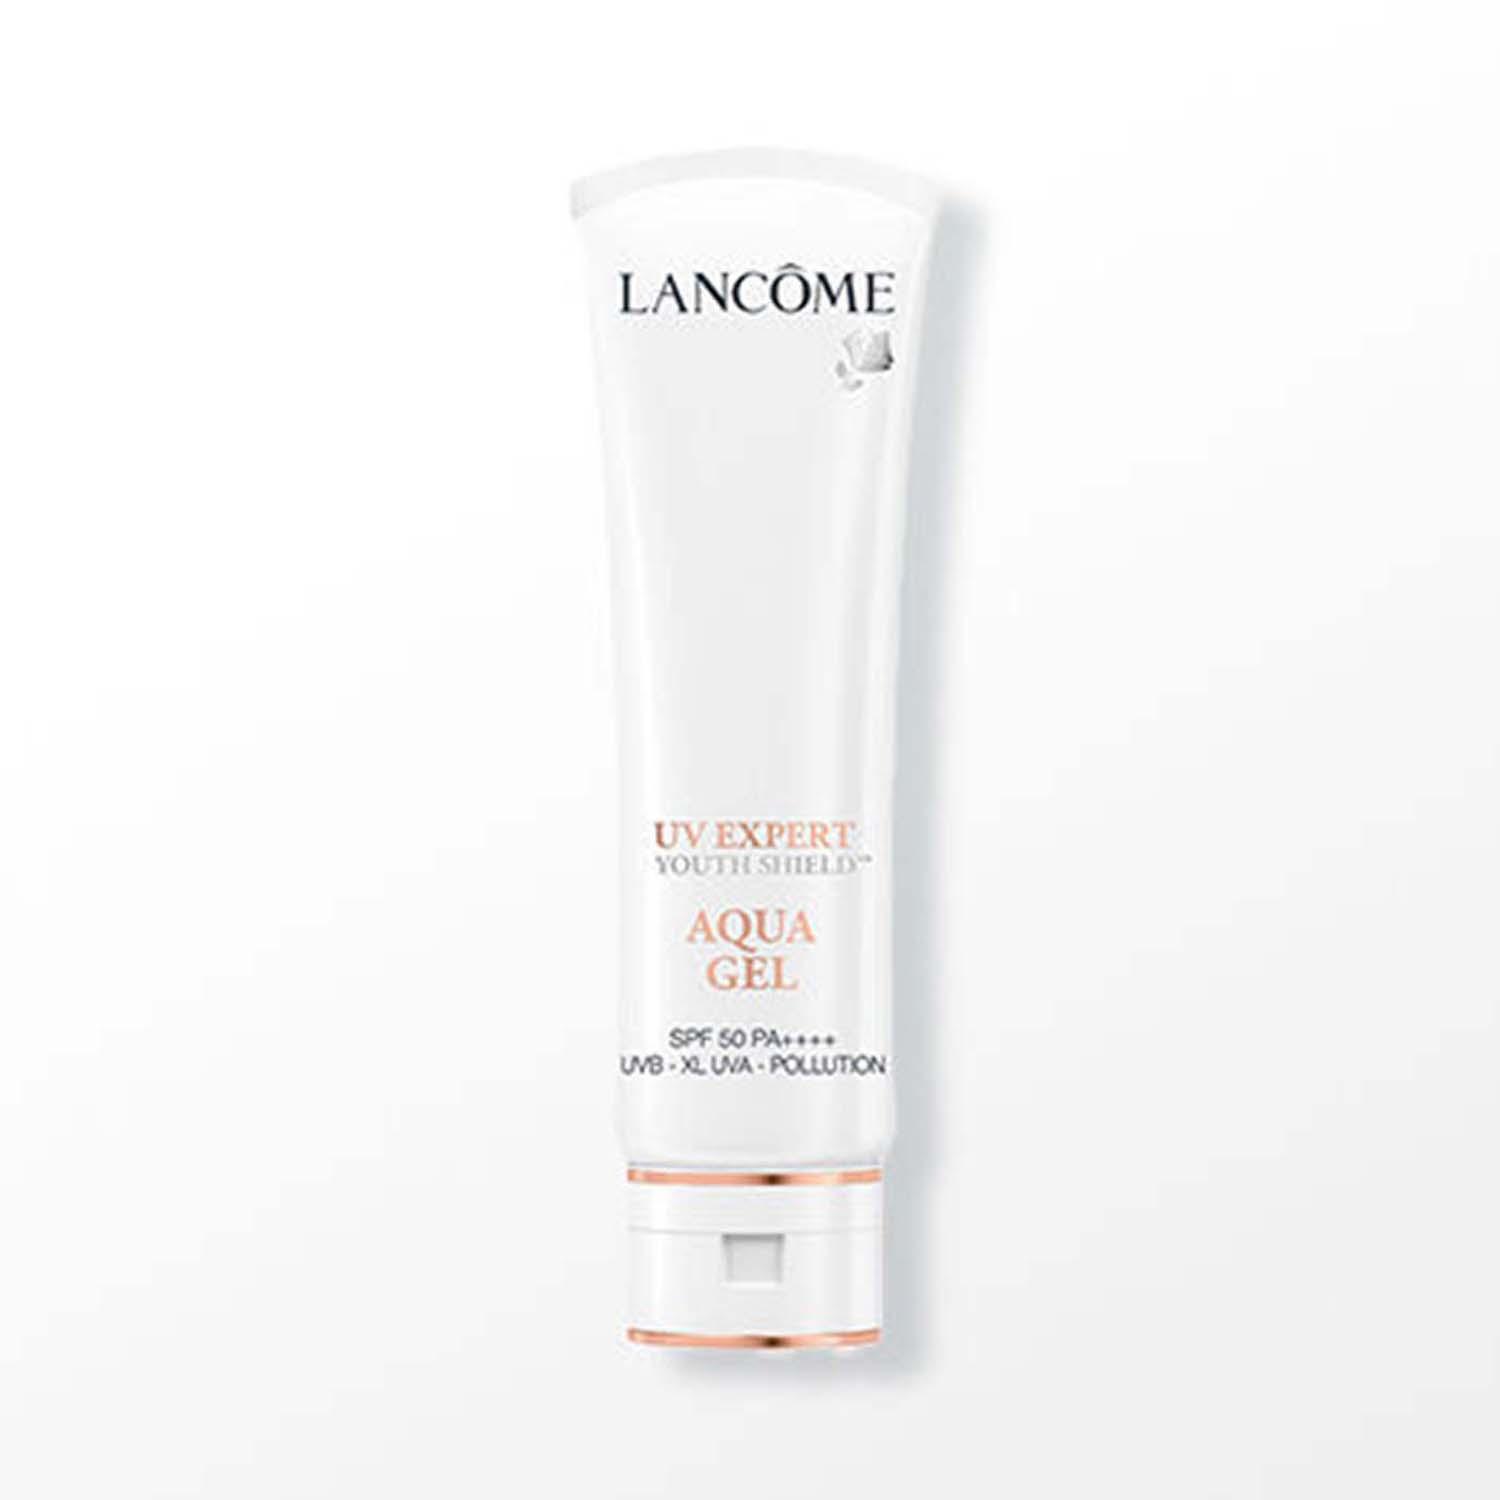 Lancome | Lancome UV Expert Aqua Gel SPF 50 PA++ (50ml)